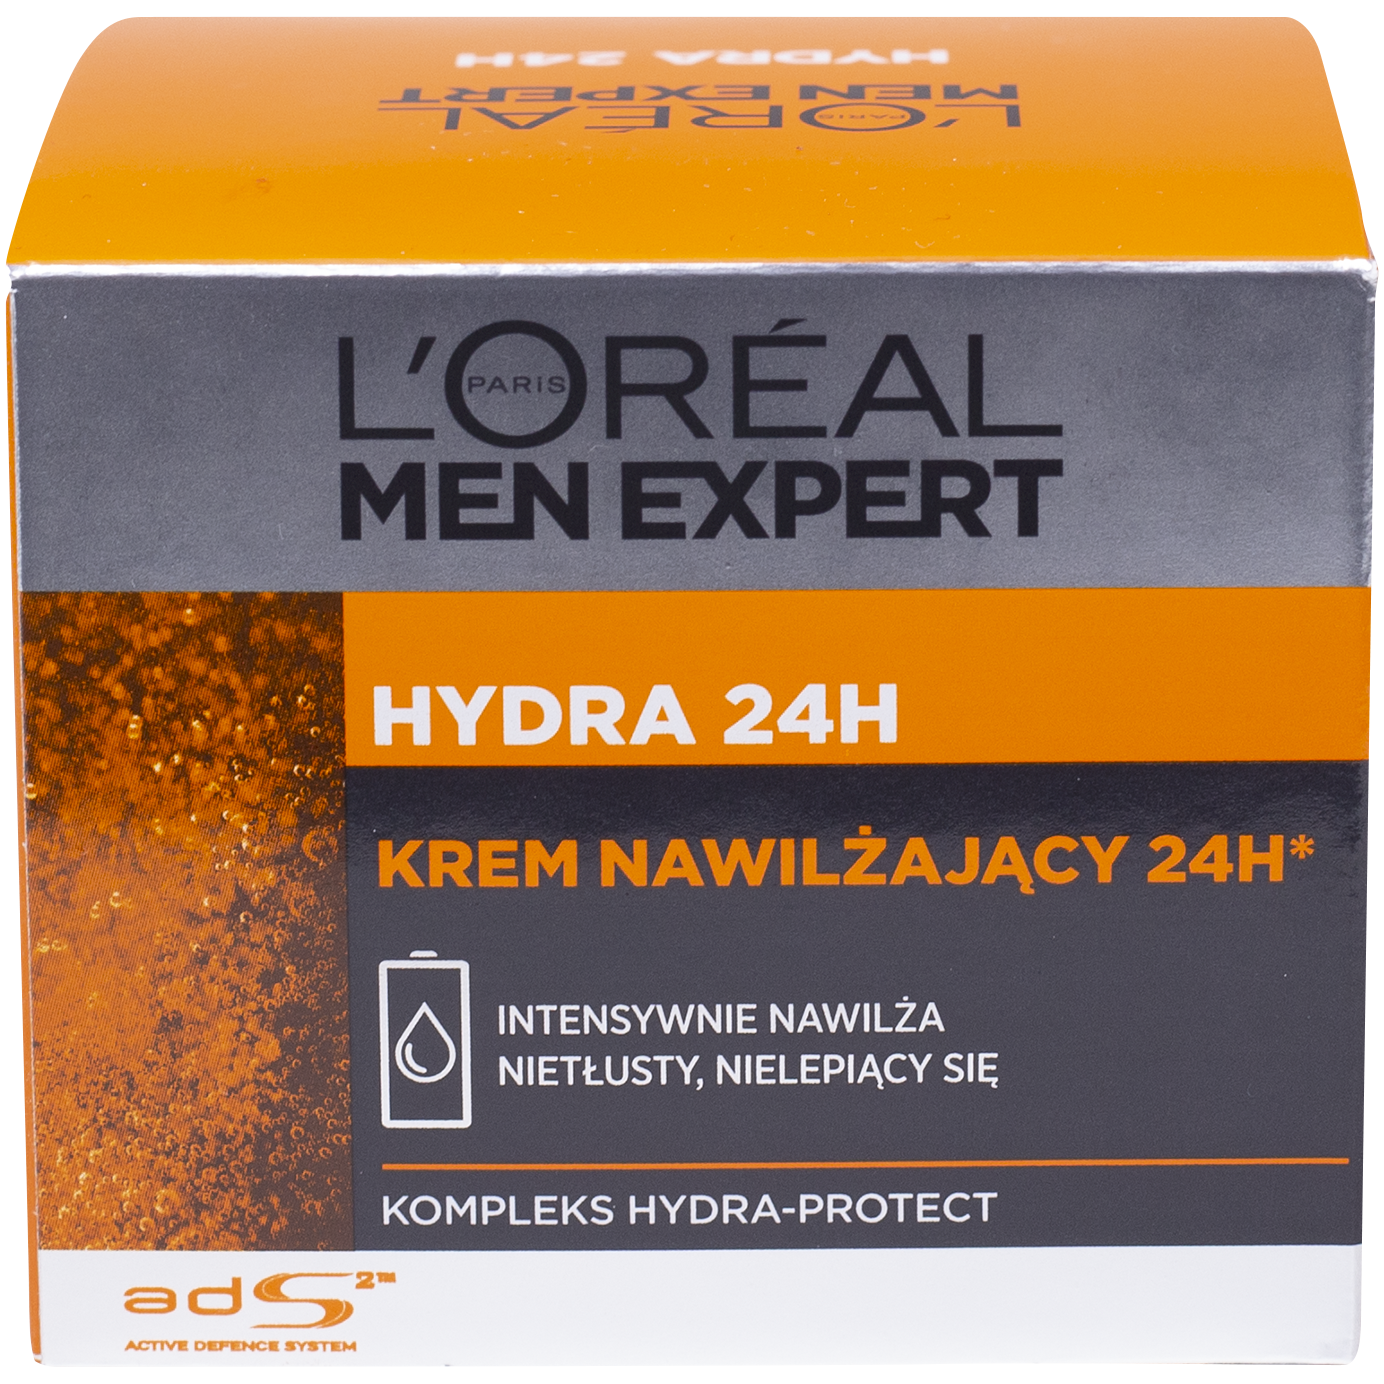 Loreal Paris Men Expert Hydra 24H HEBE.pl | hebe.pl